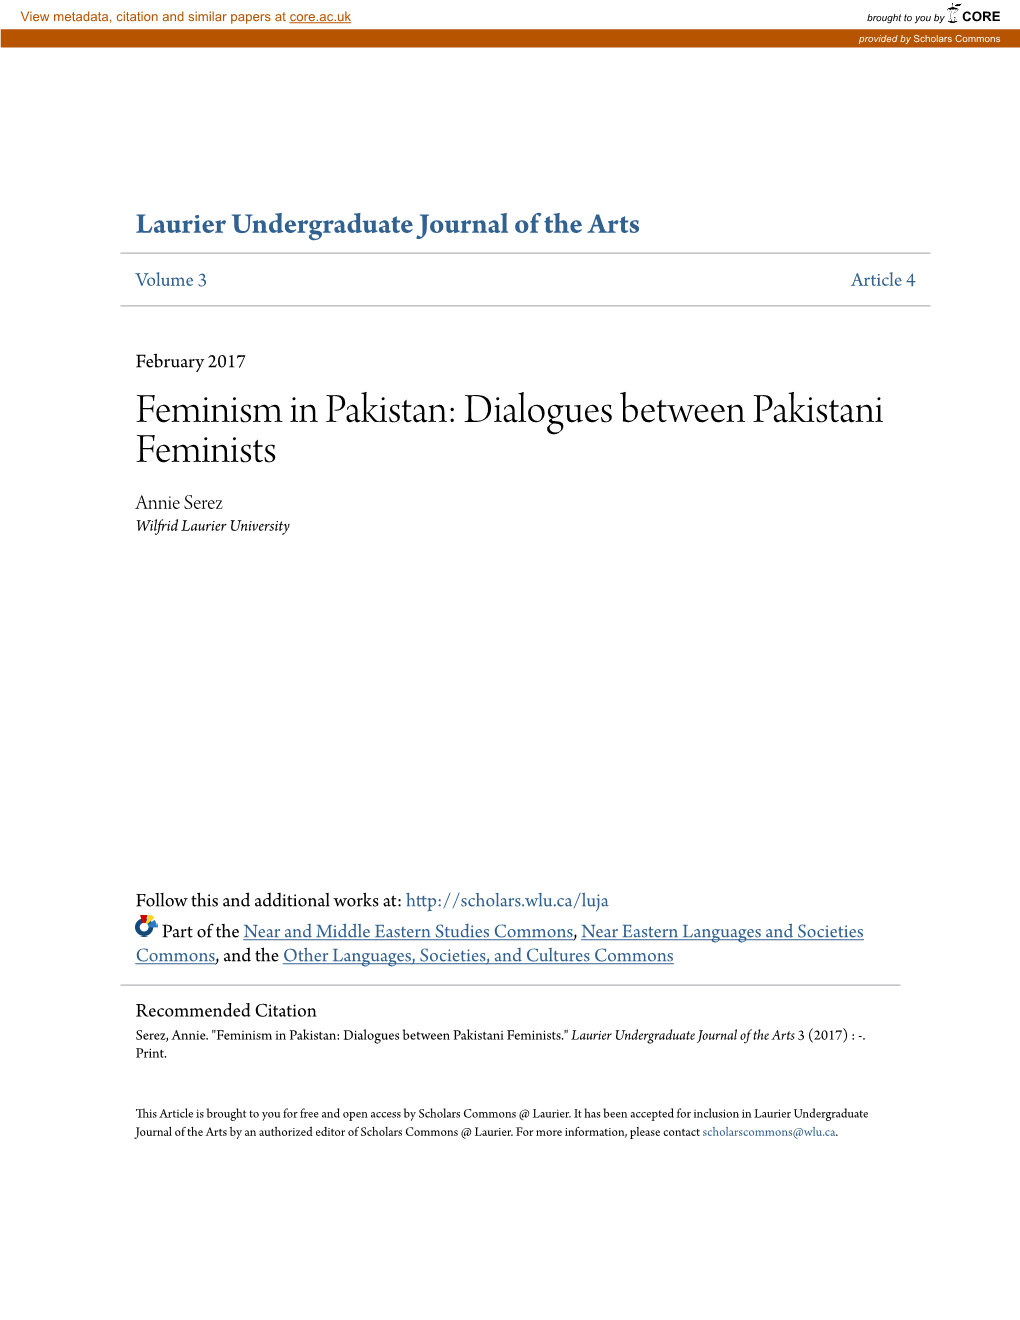 Feminism in Pakistan: Dialogues Between Pakistani Feminists Annie Serez Wilfrid Laurier University